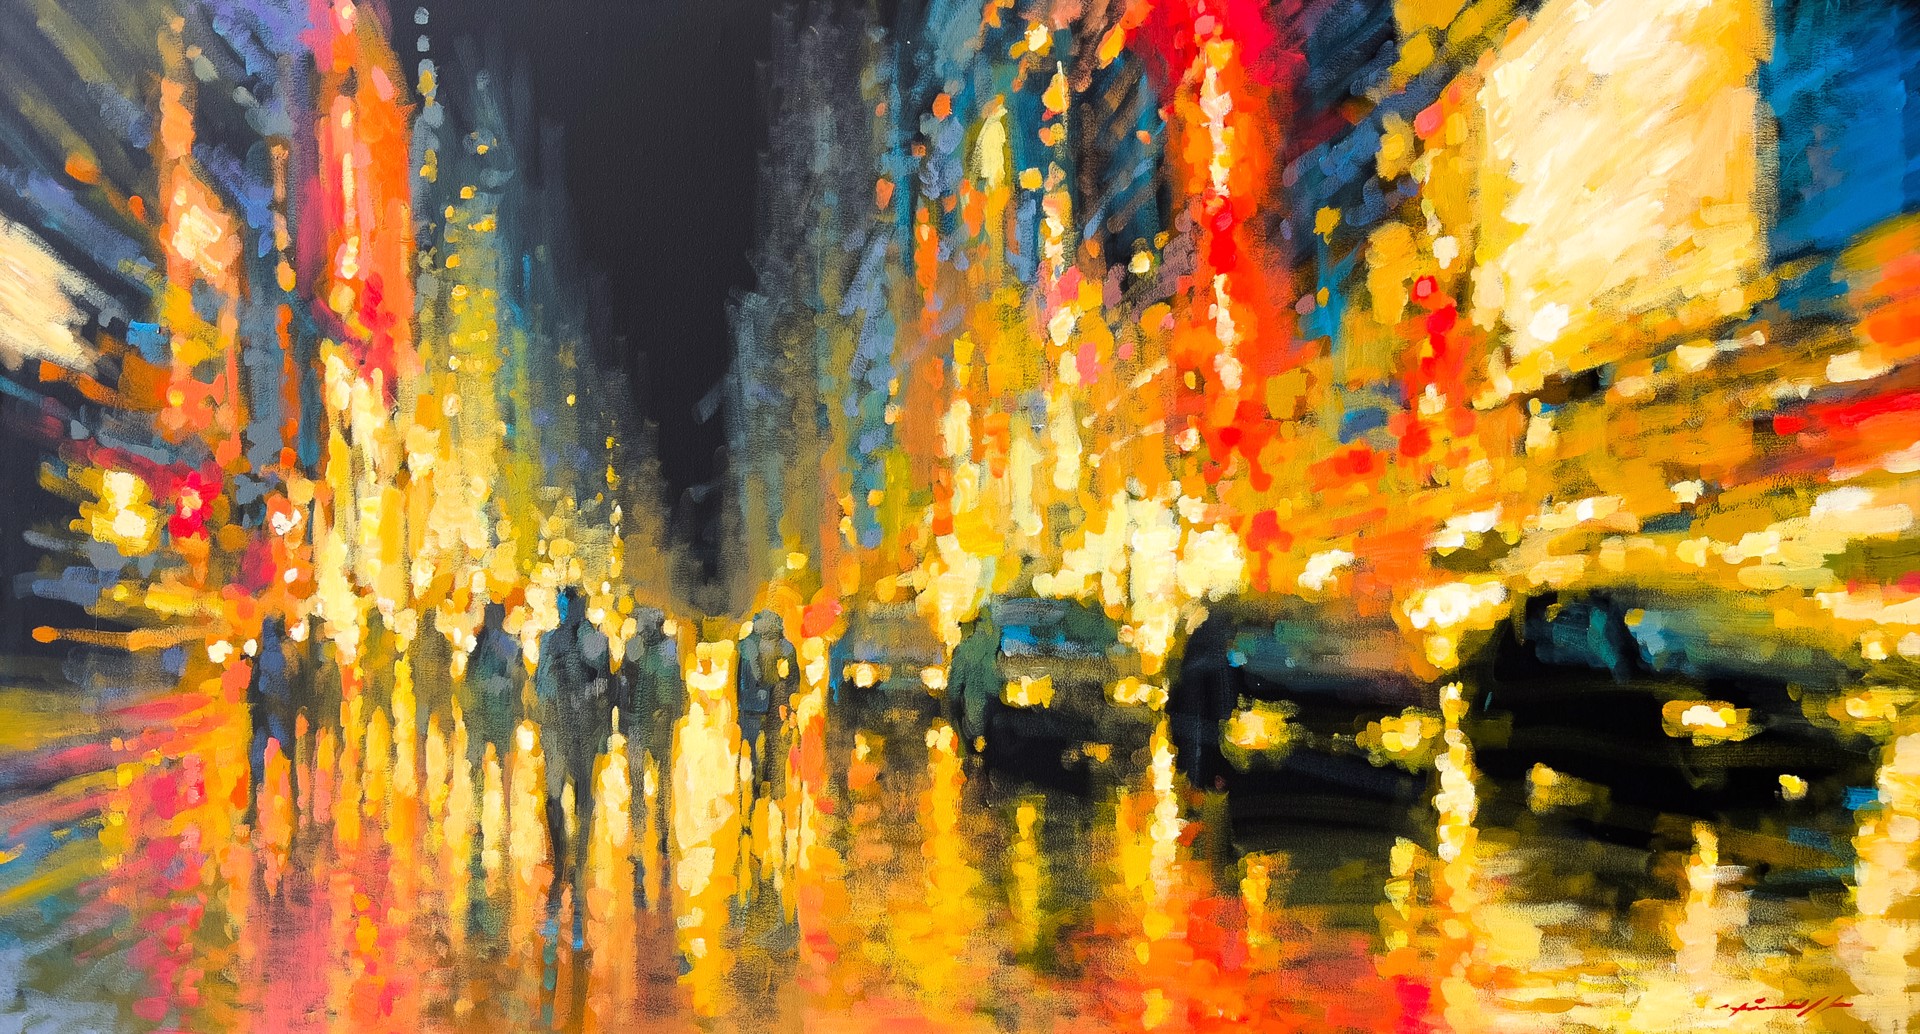 City Lights by David Hinchliffe